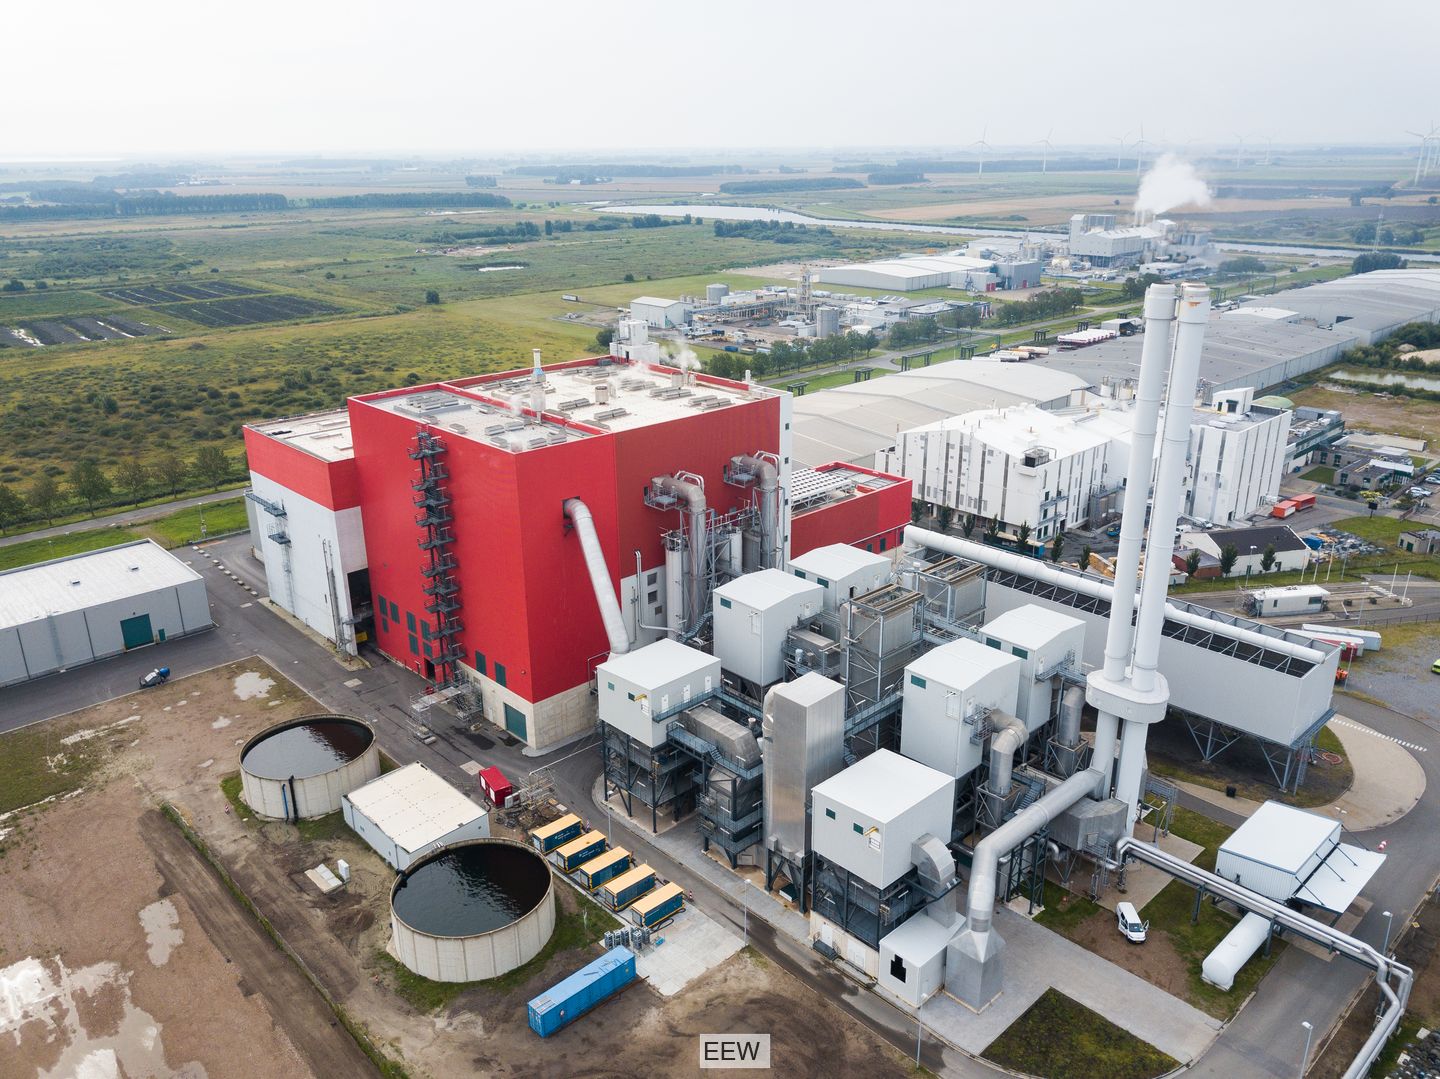 EEW's waste to energy plant in Delfzijl, Netherlands